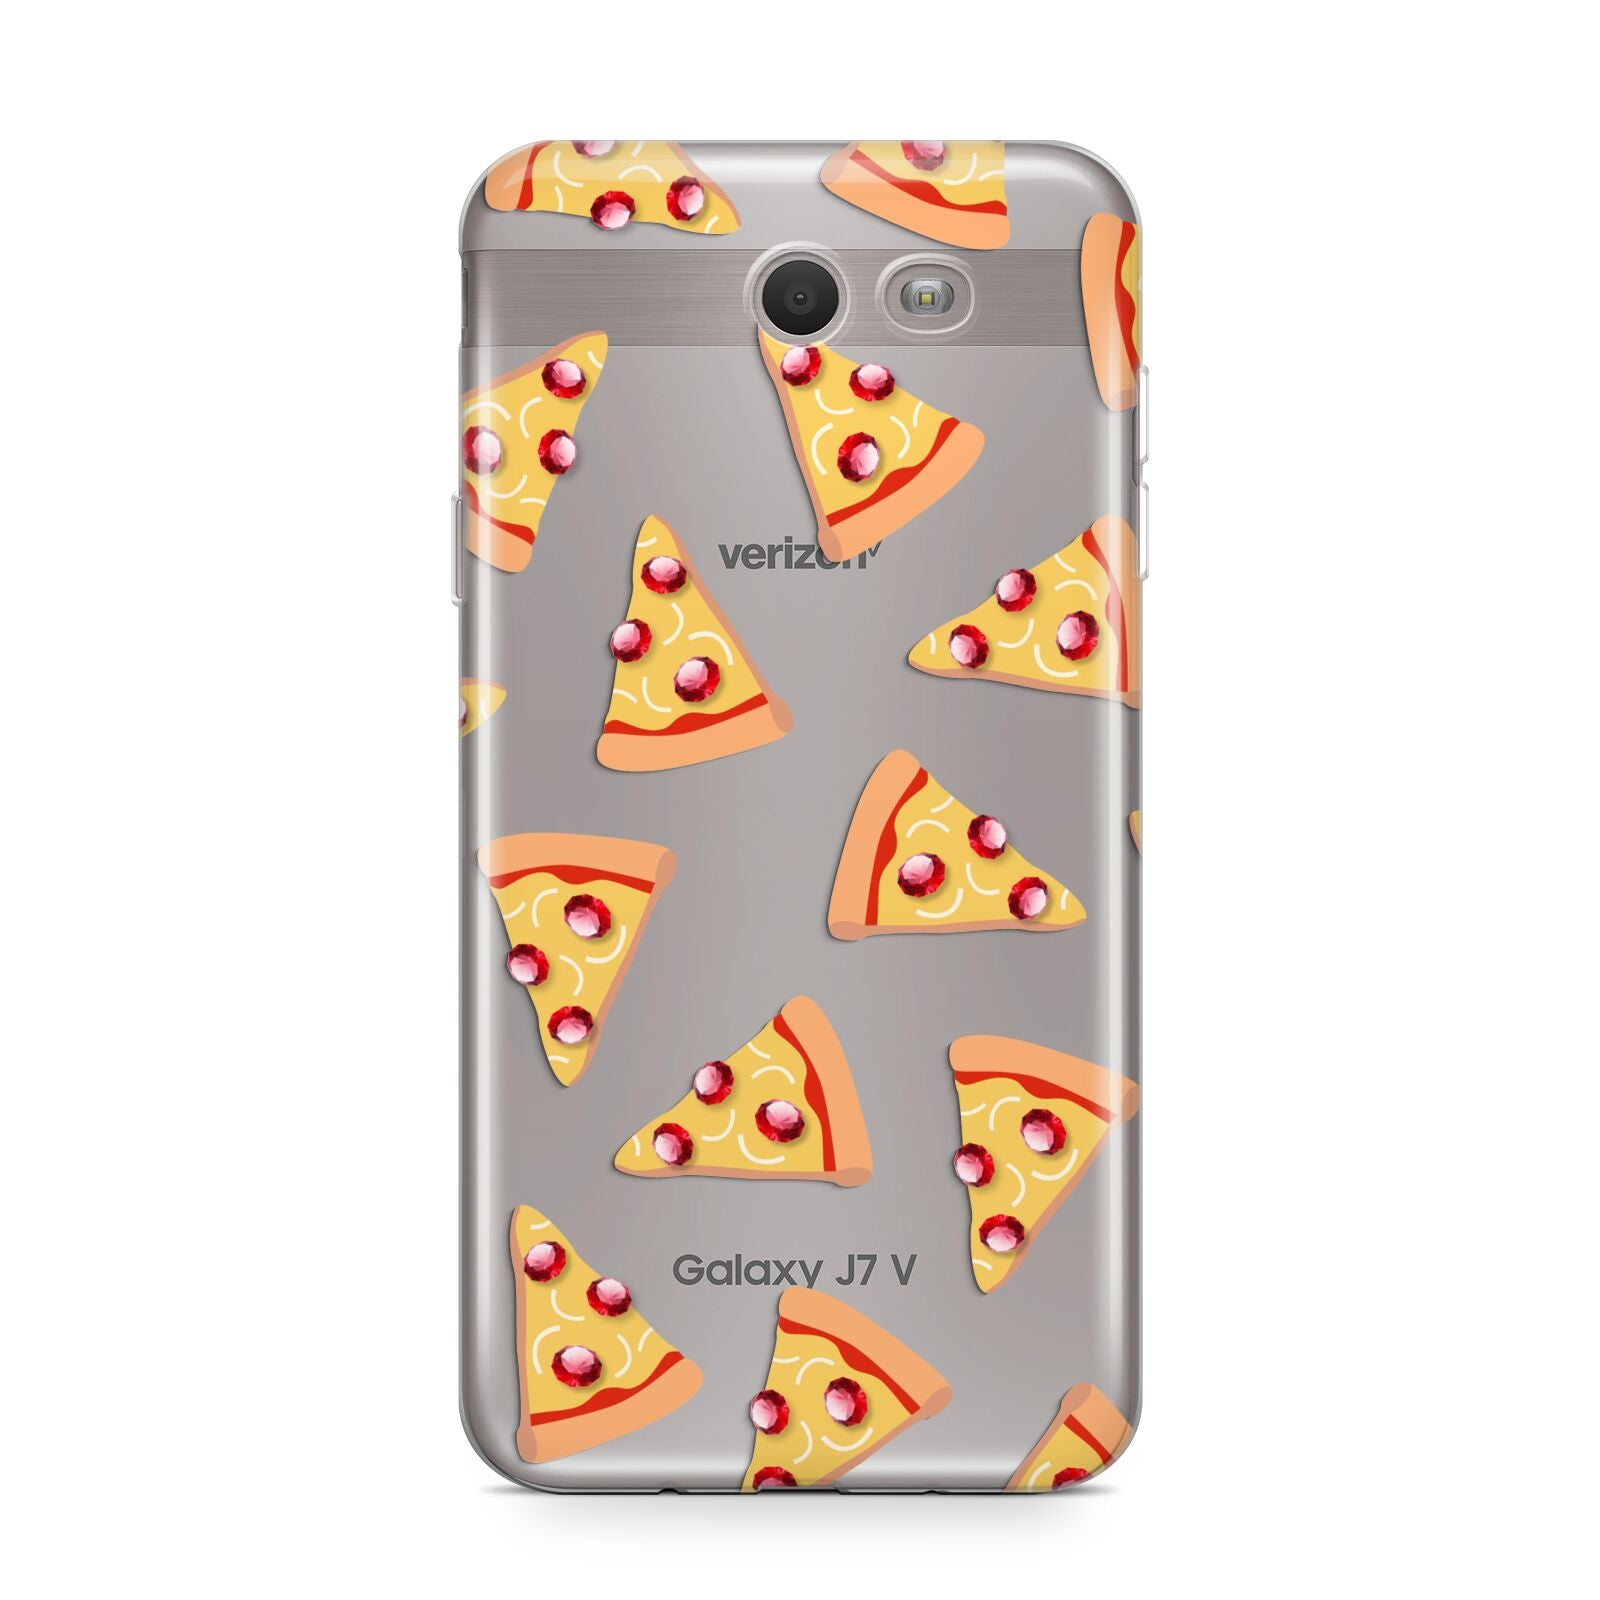 Rubies on Cartoon Pizza Slices Samsung Galaxy J7 2017 Case